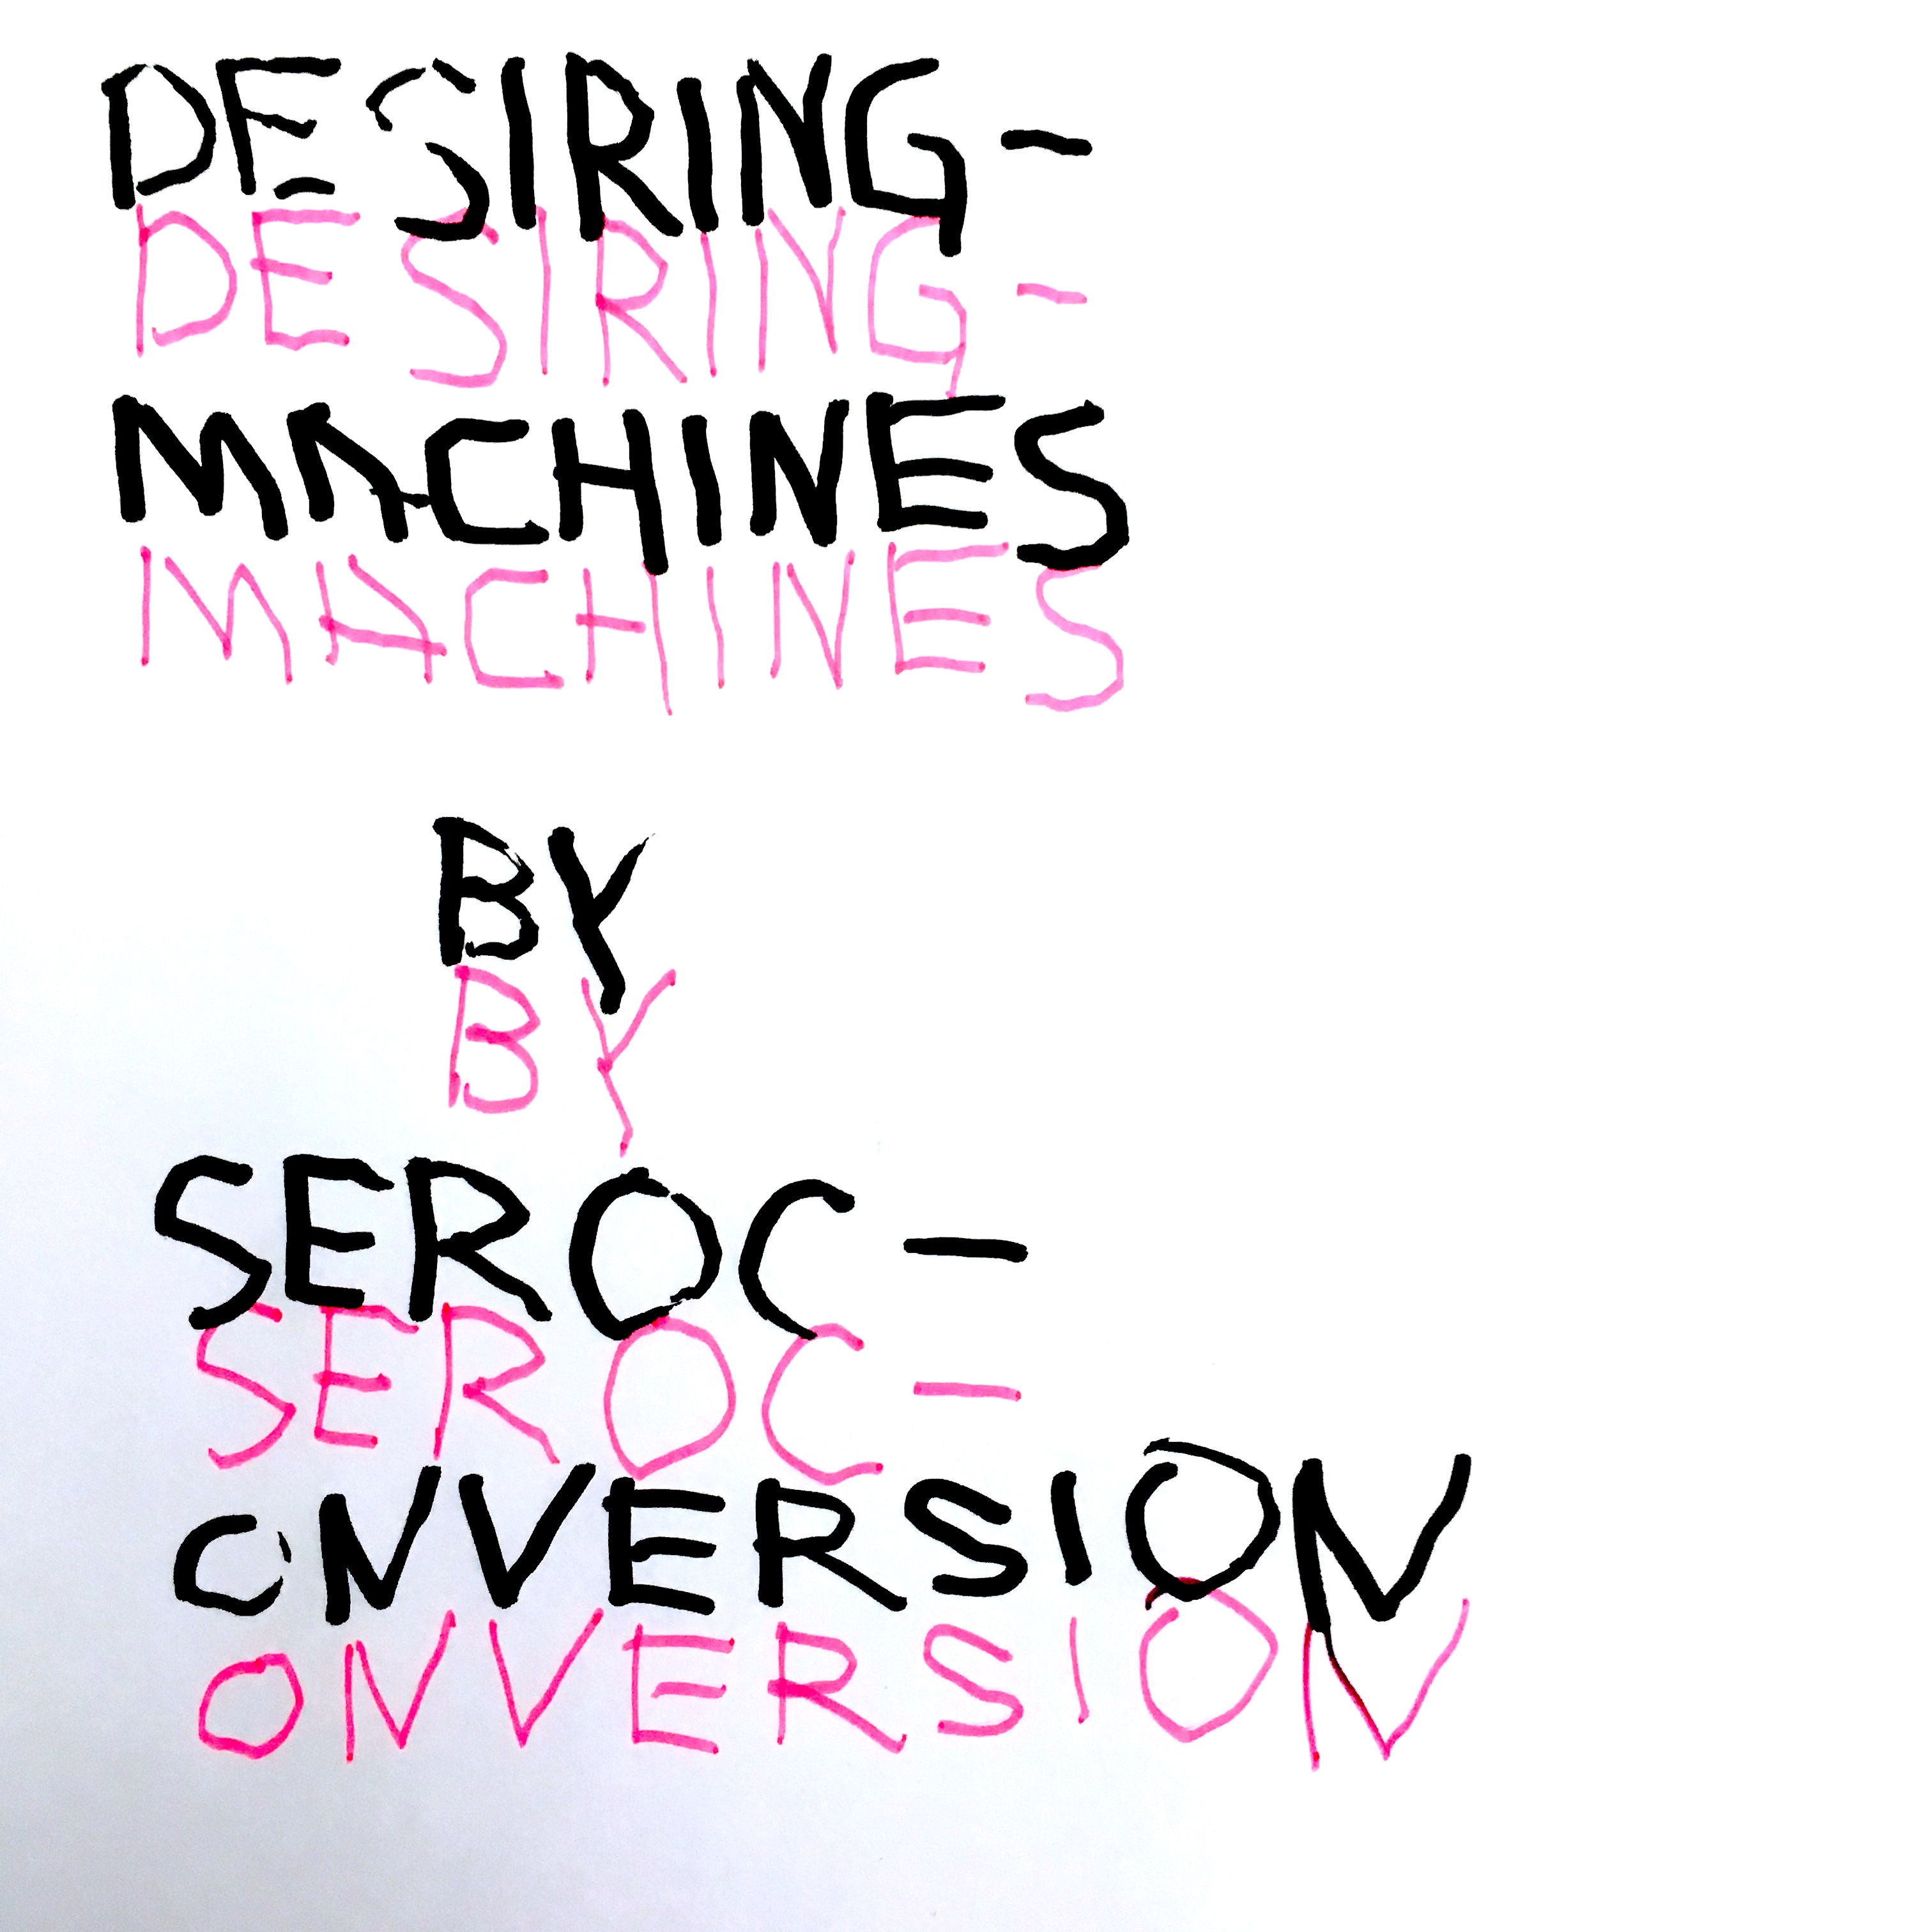 Desiring-Machines